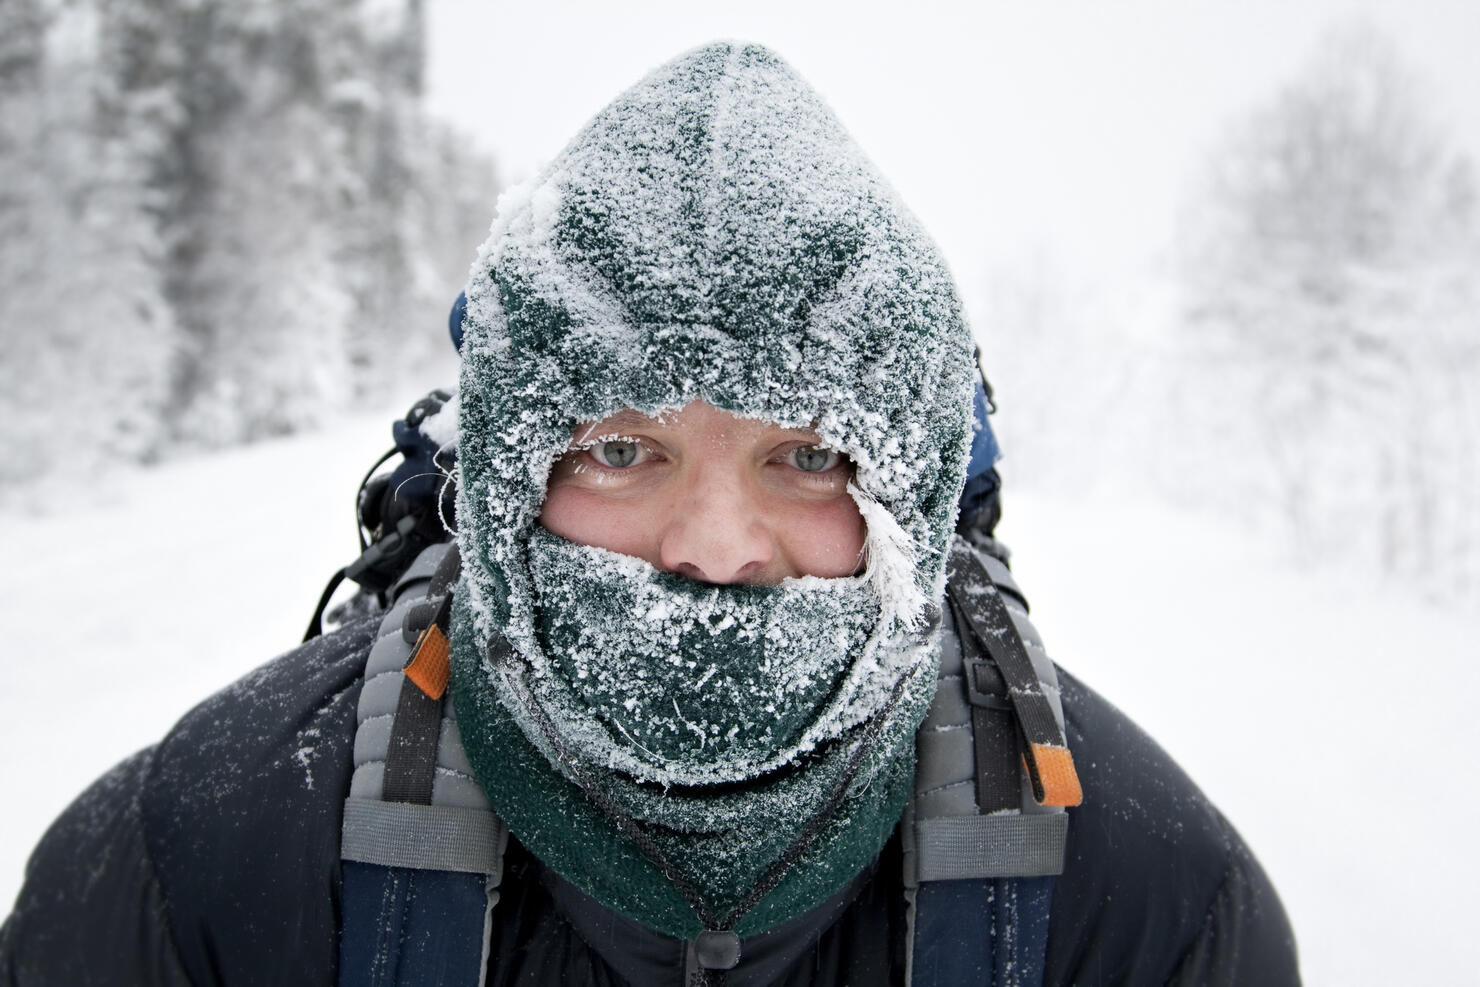 Man wearing frosty face mask